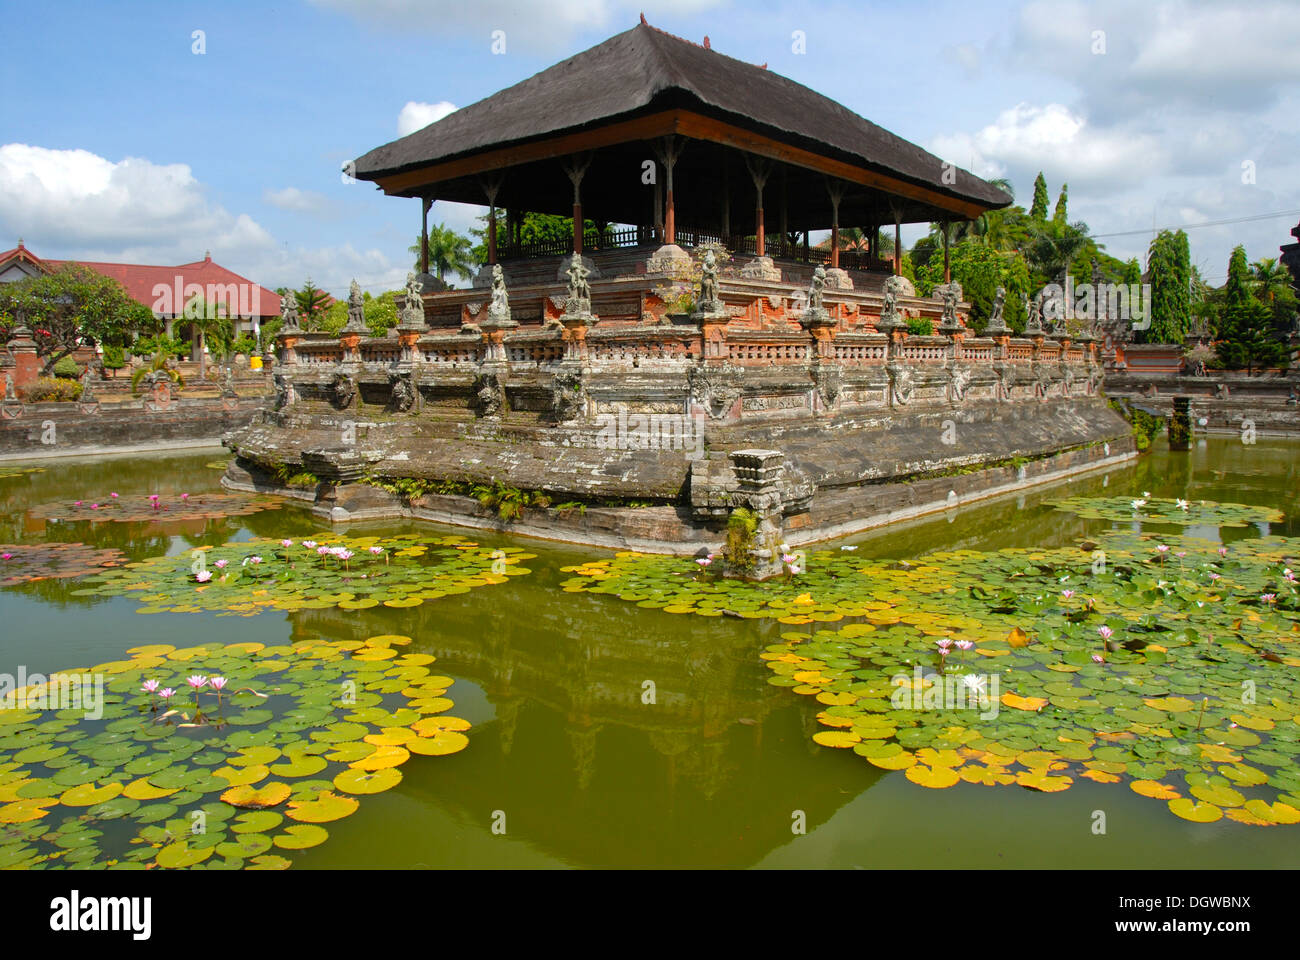 Royal Palace, pond with water lilies, floating pavilion Bale Kambang, palace Taman Gili, Klungkung, Semarapura, Bali, Indonesia Stock Photo